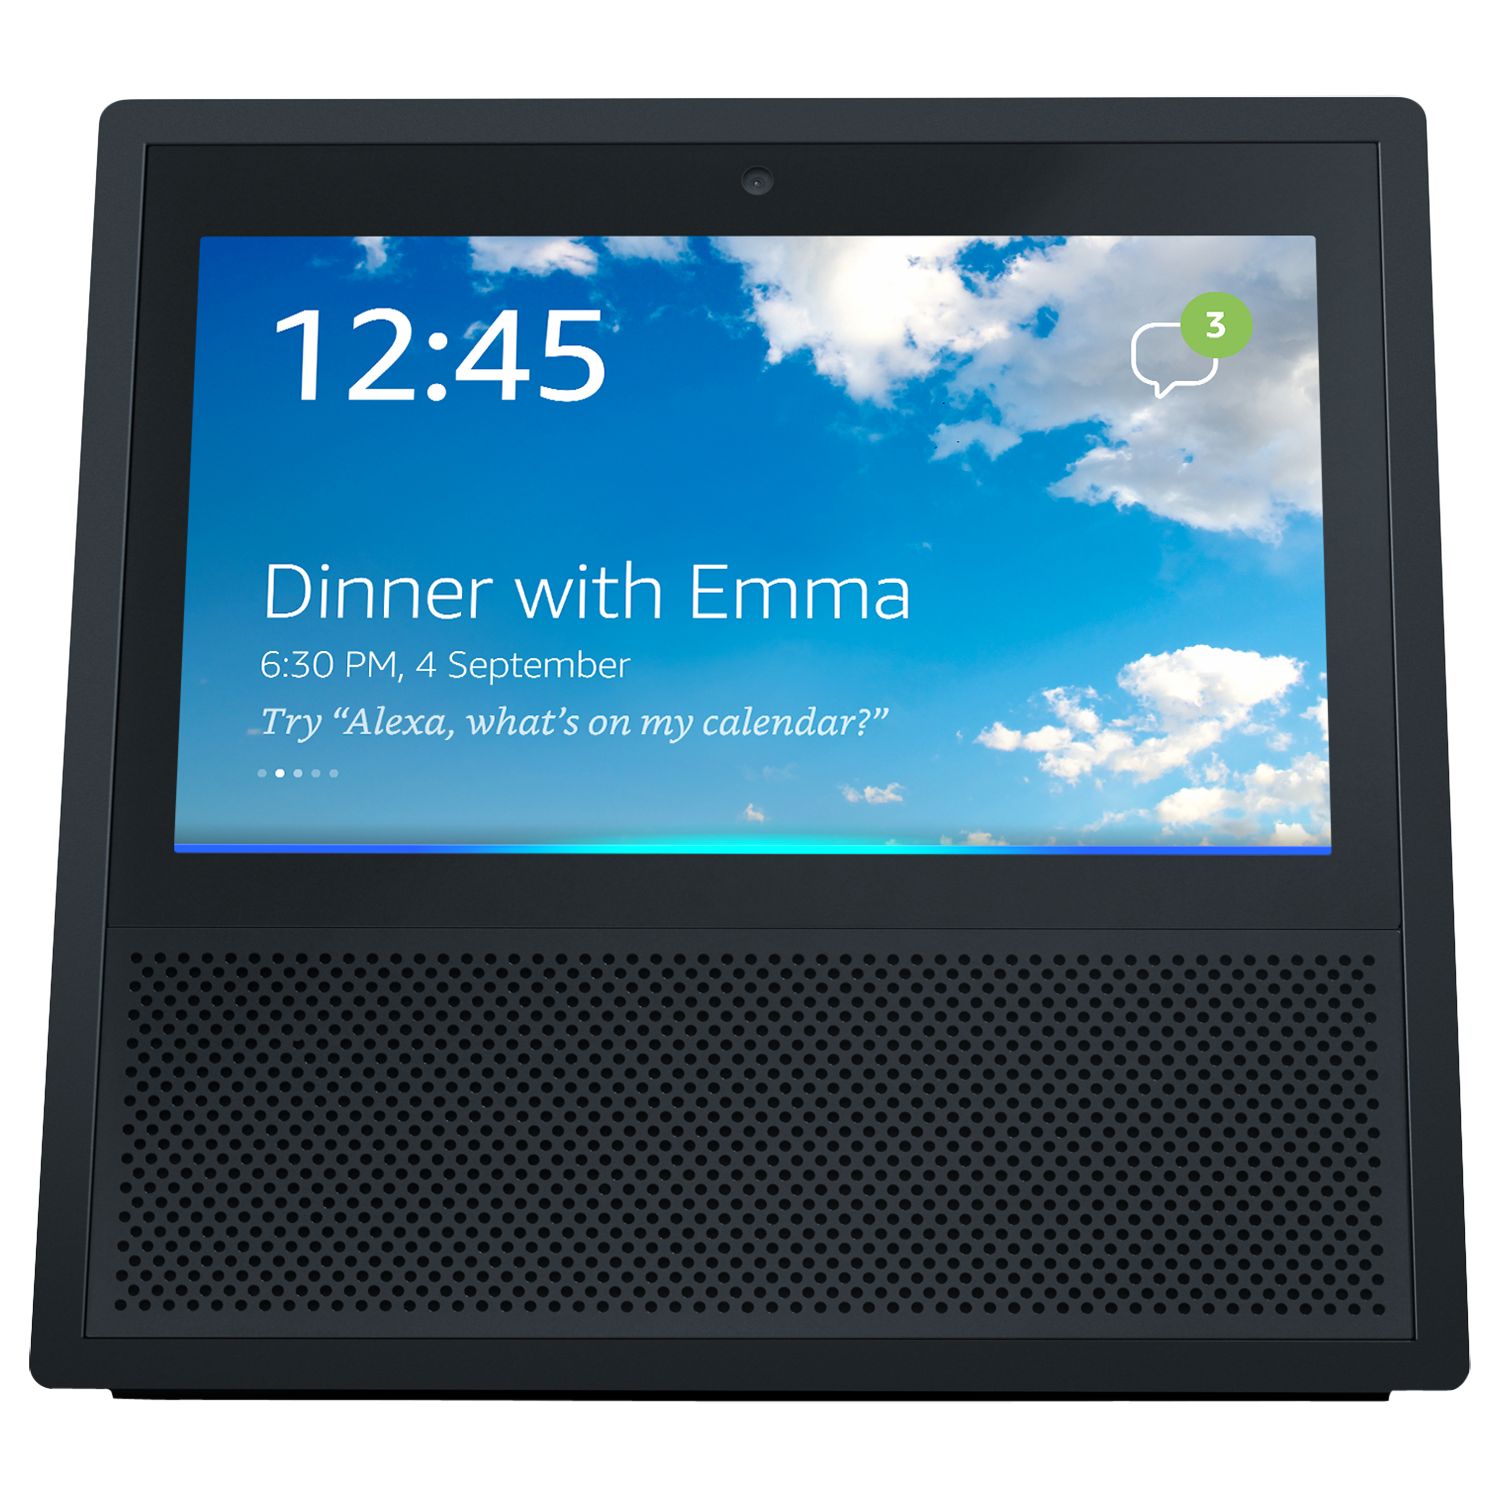 Amazon Echo Show Smart Speaker with 7" Screen & Alexa Voice Recognition & Control